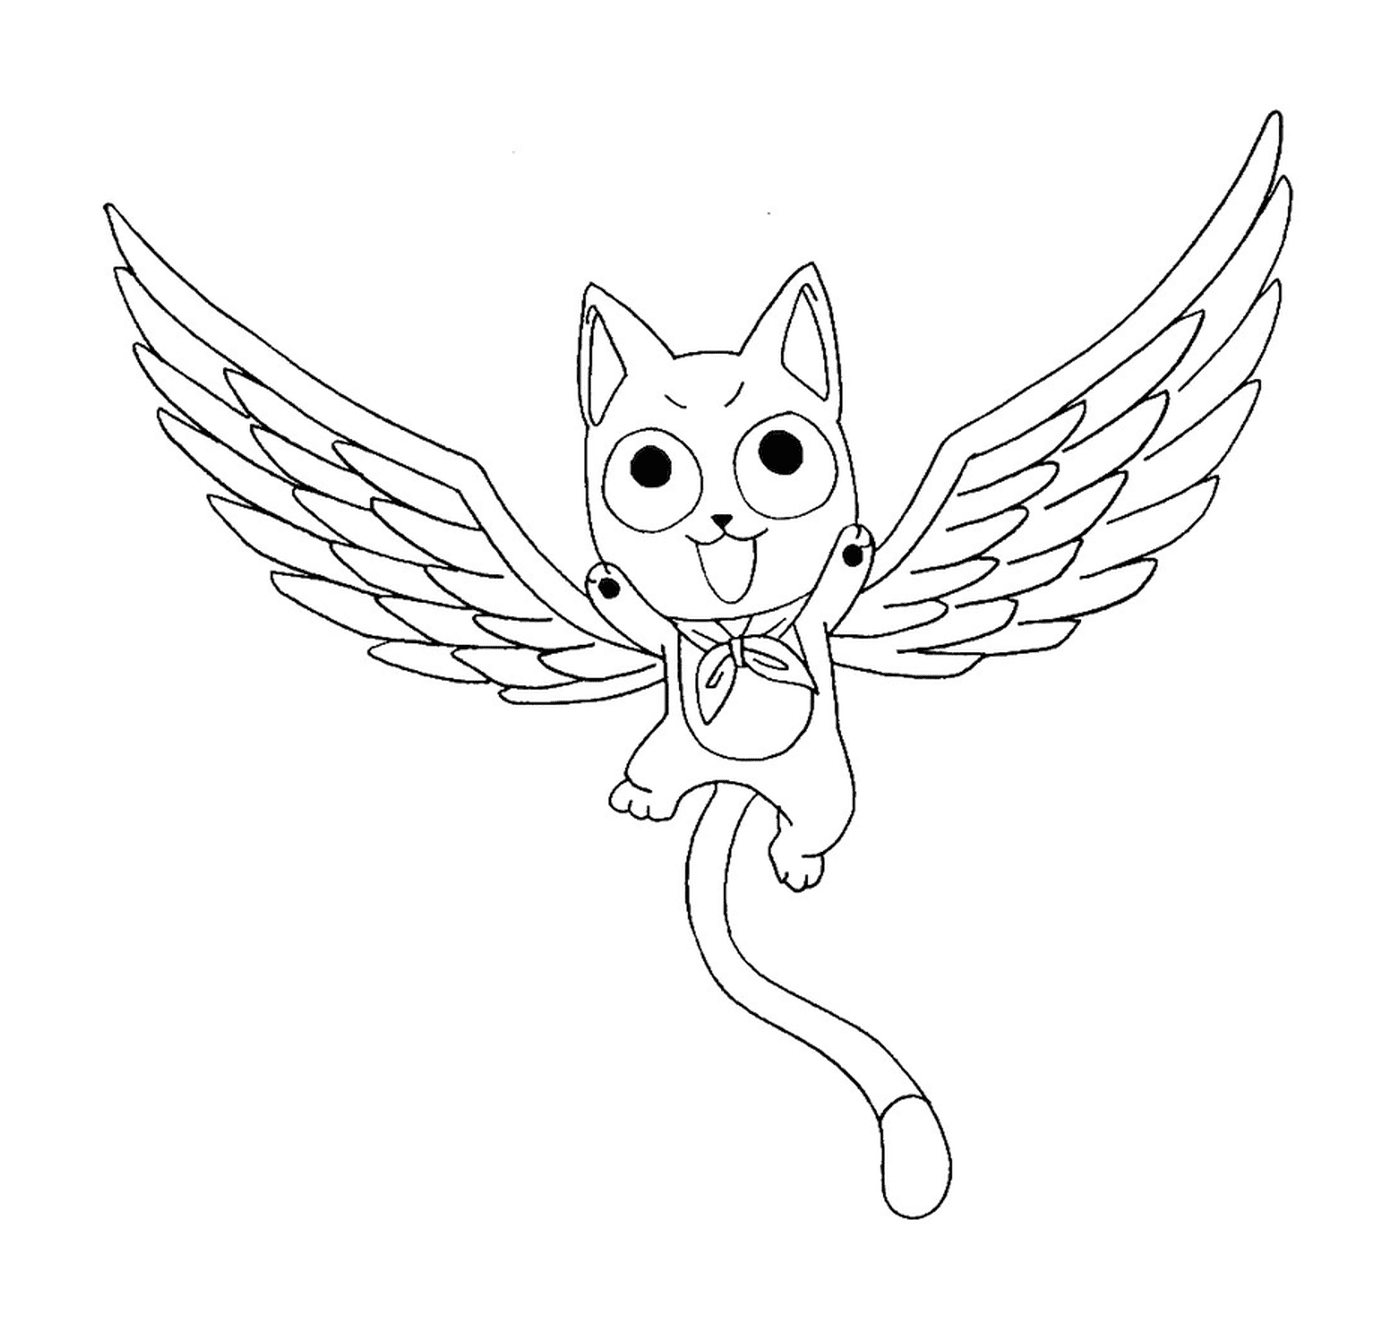  Un gato con alas volando 